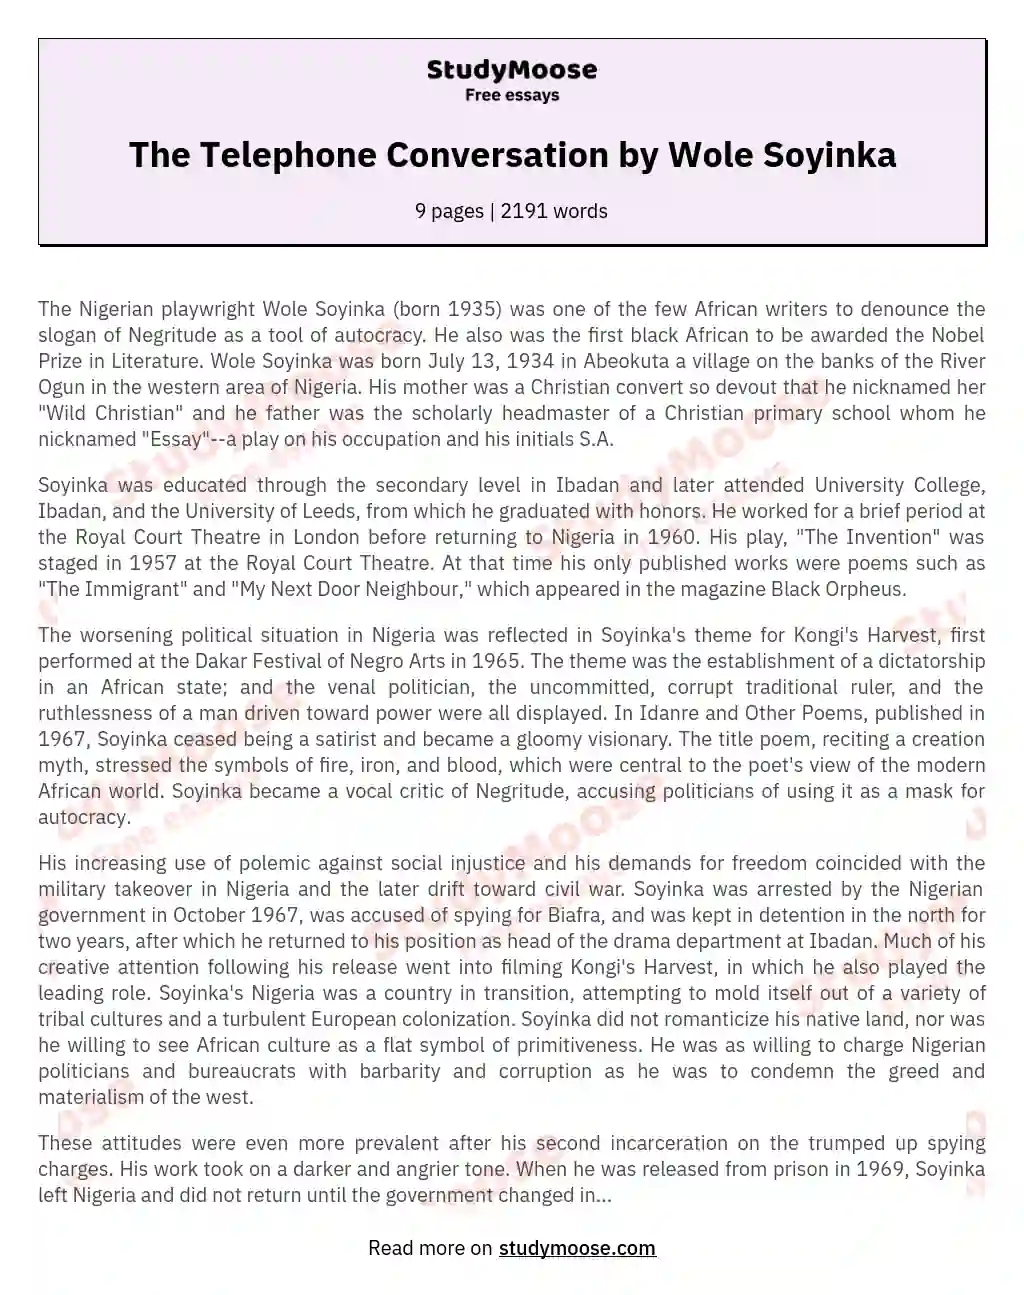 The Telephone Conversation by Wole Soyinka essay